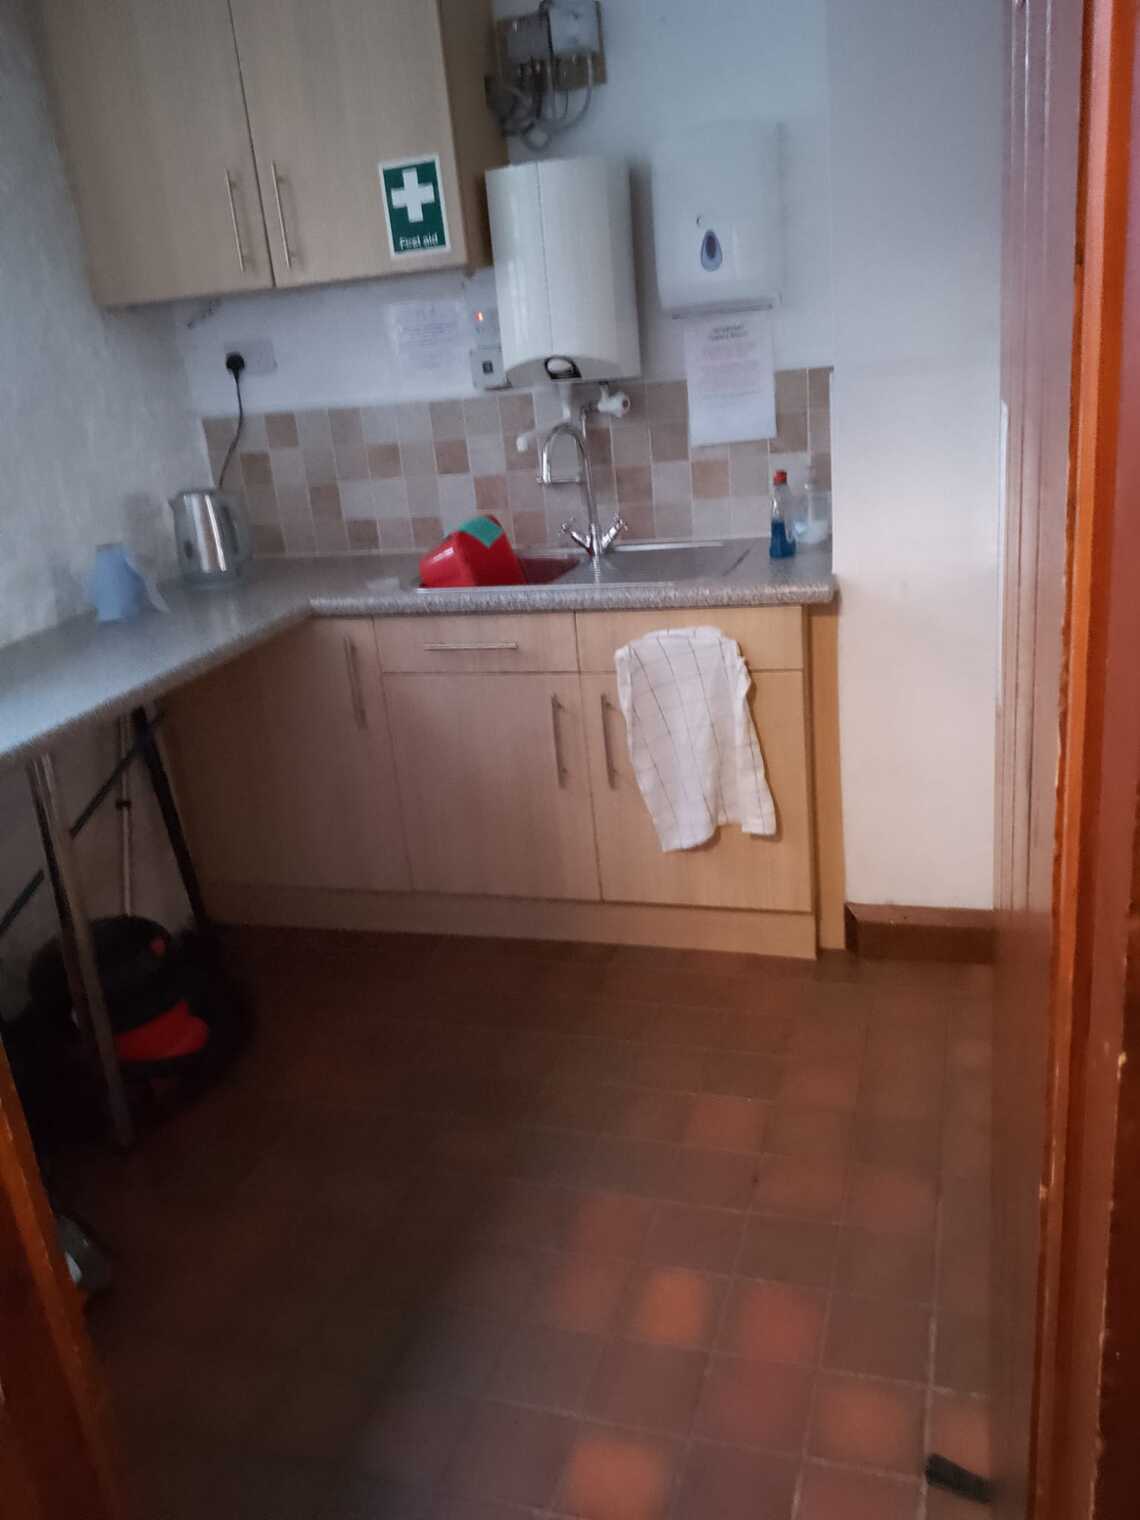 Small kitchen area